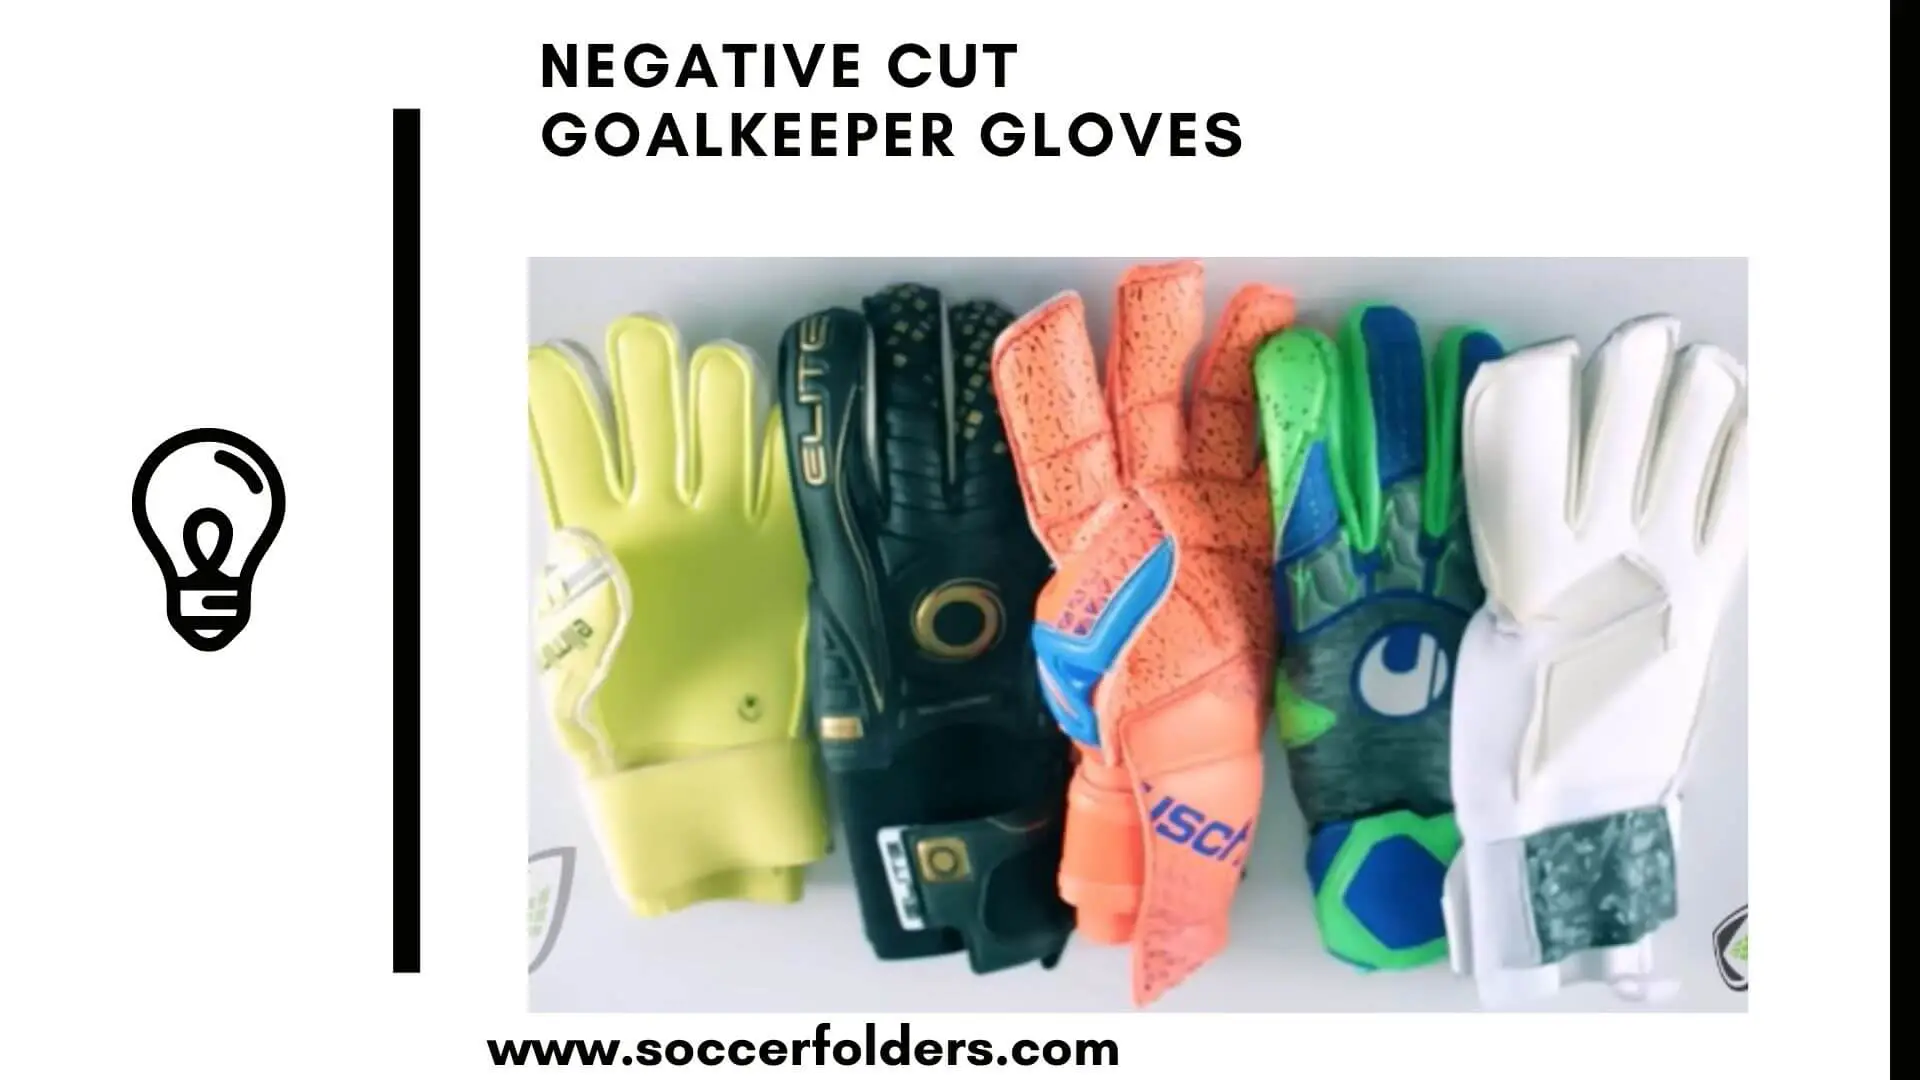 Negative cut goalkeeper gloves - Featured image